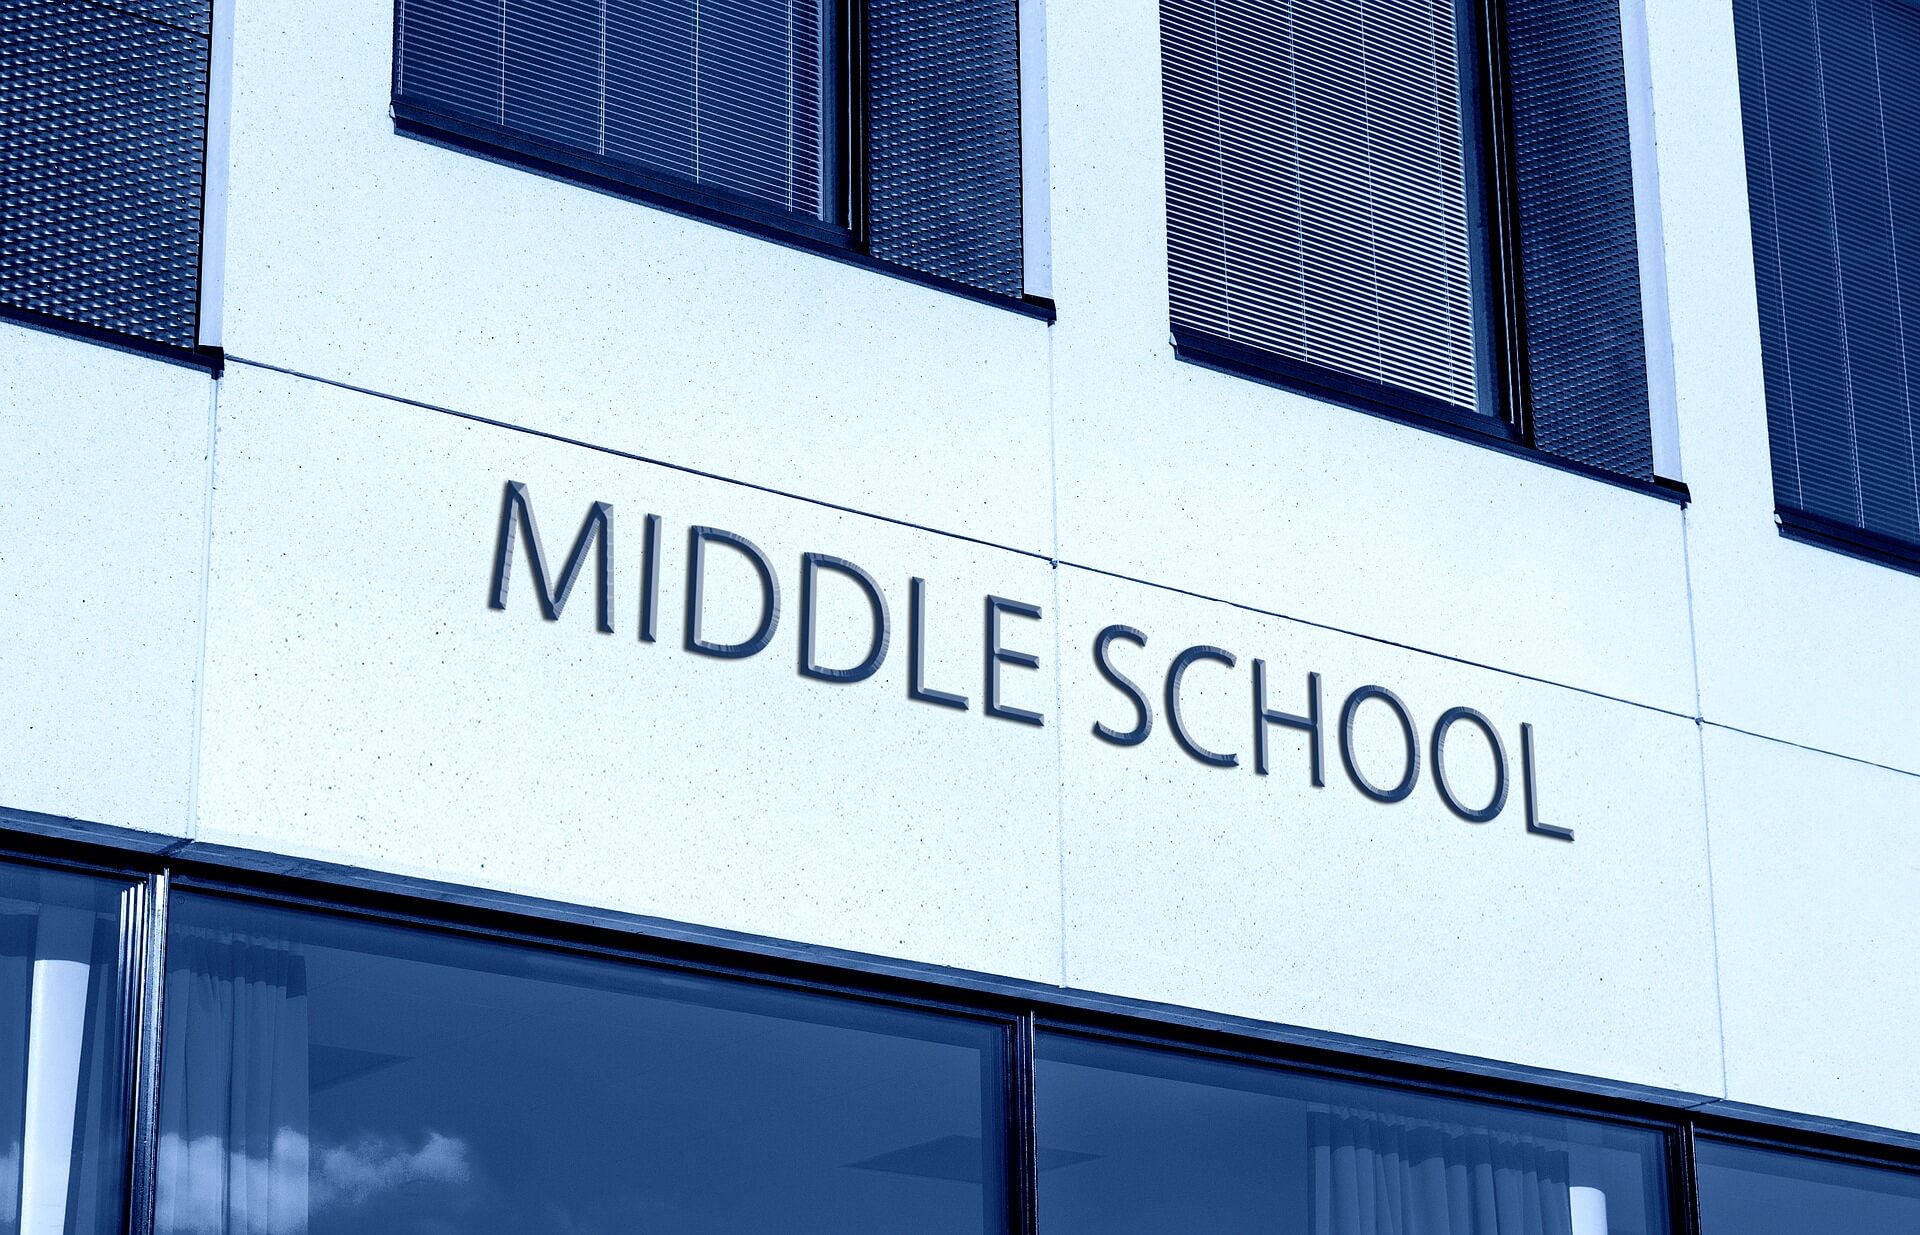 Middle school building